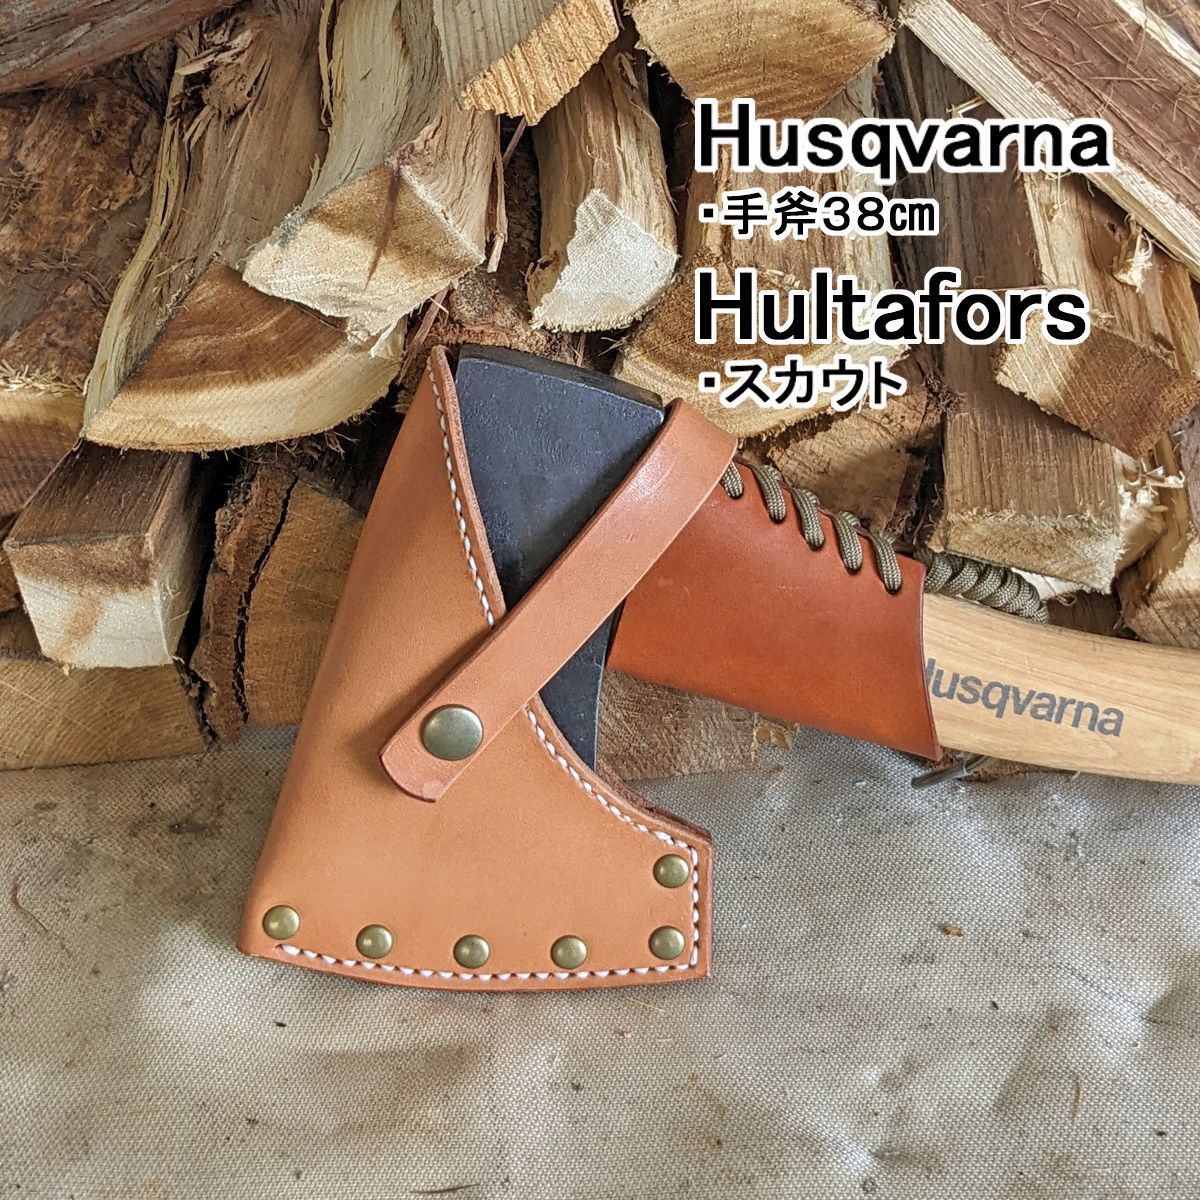 Husqvarna ハスクバーナ Hultafors ハルタホース 手斧用 レザーシース